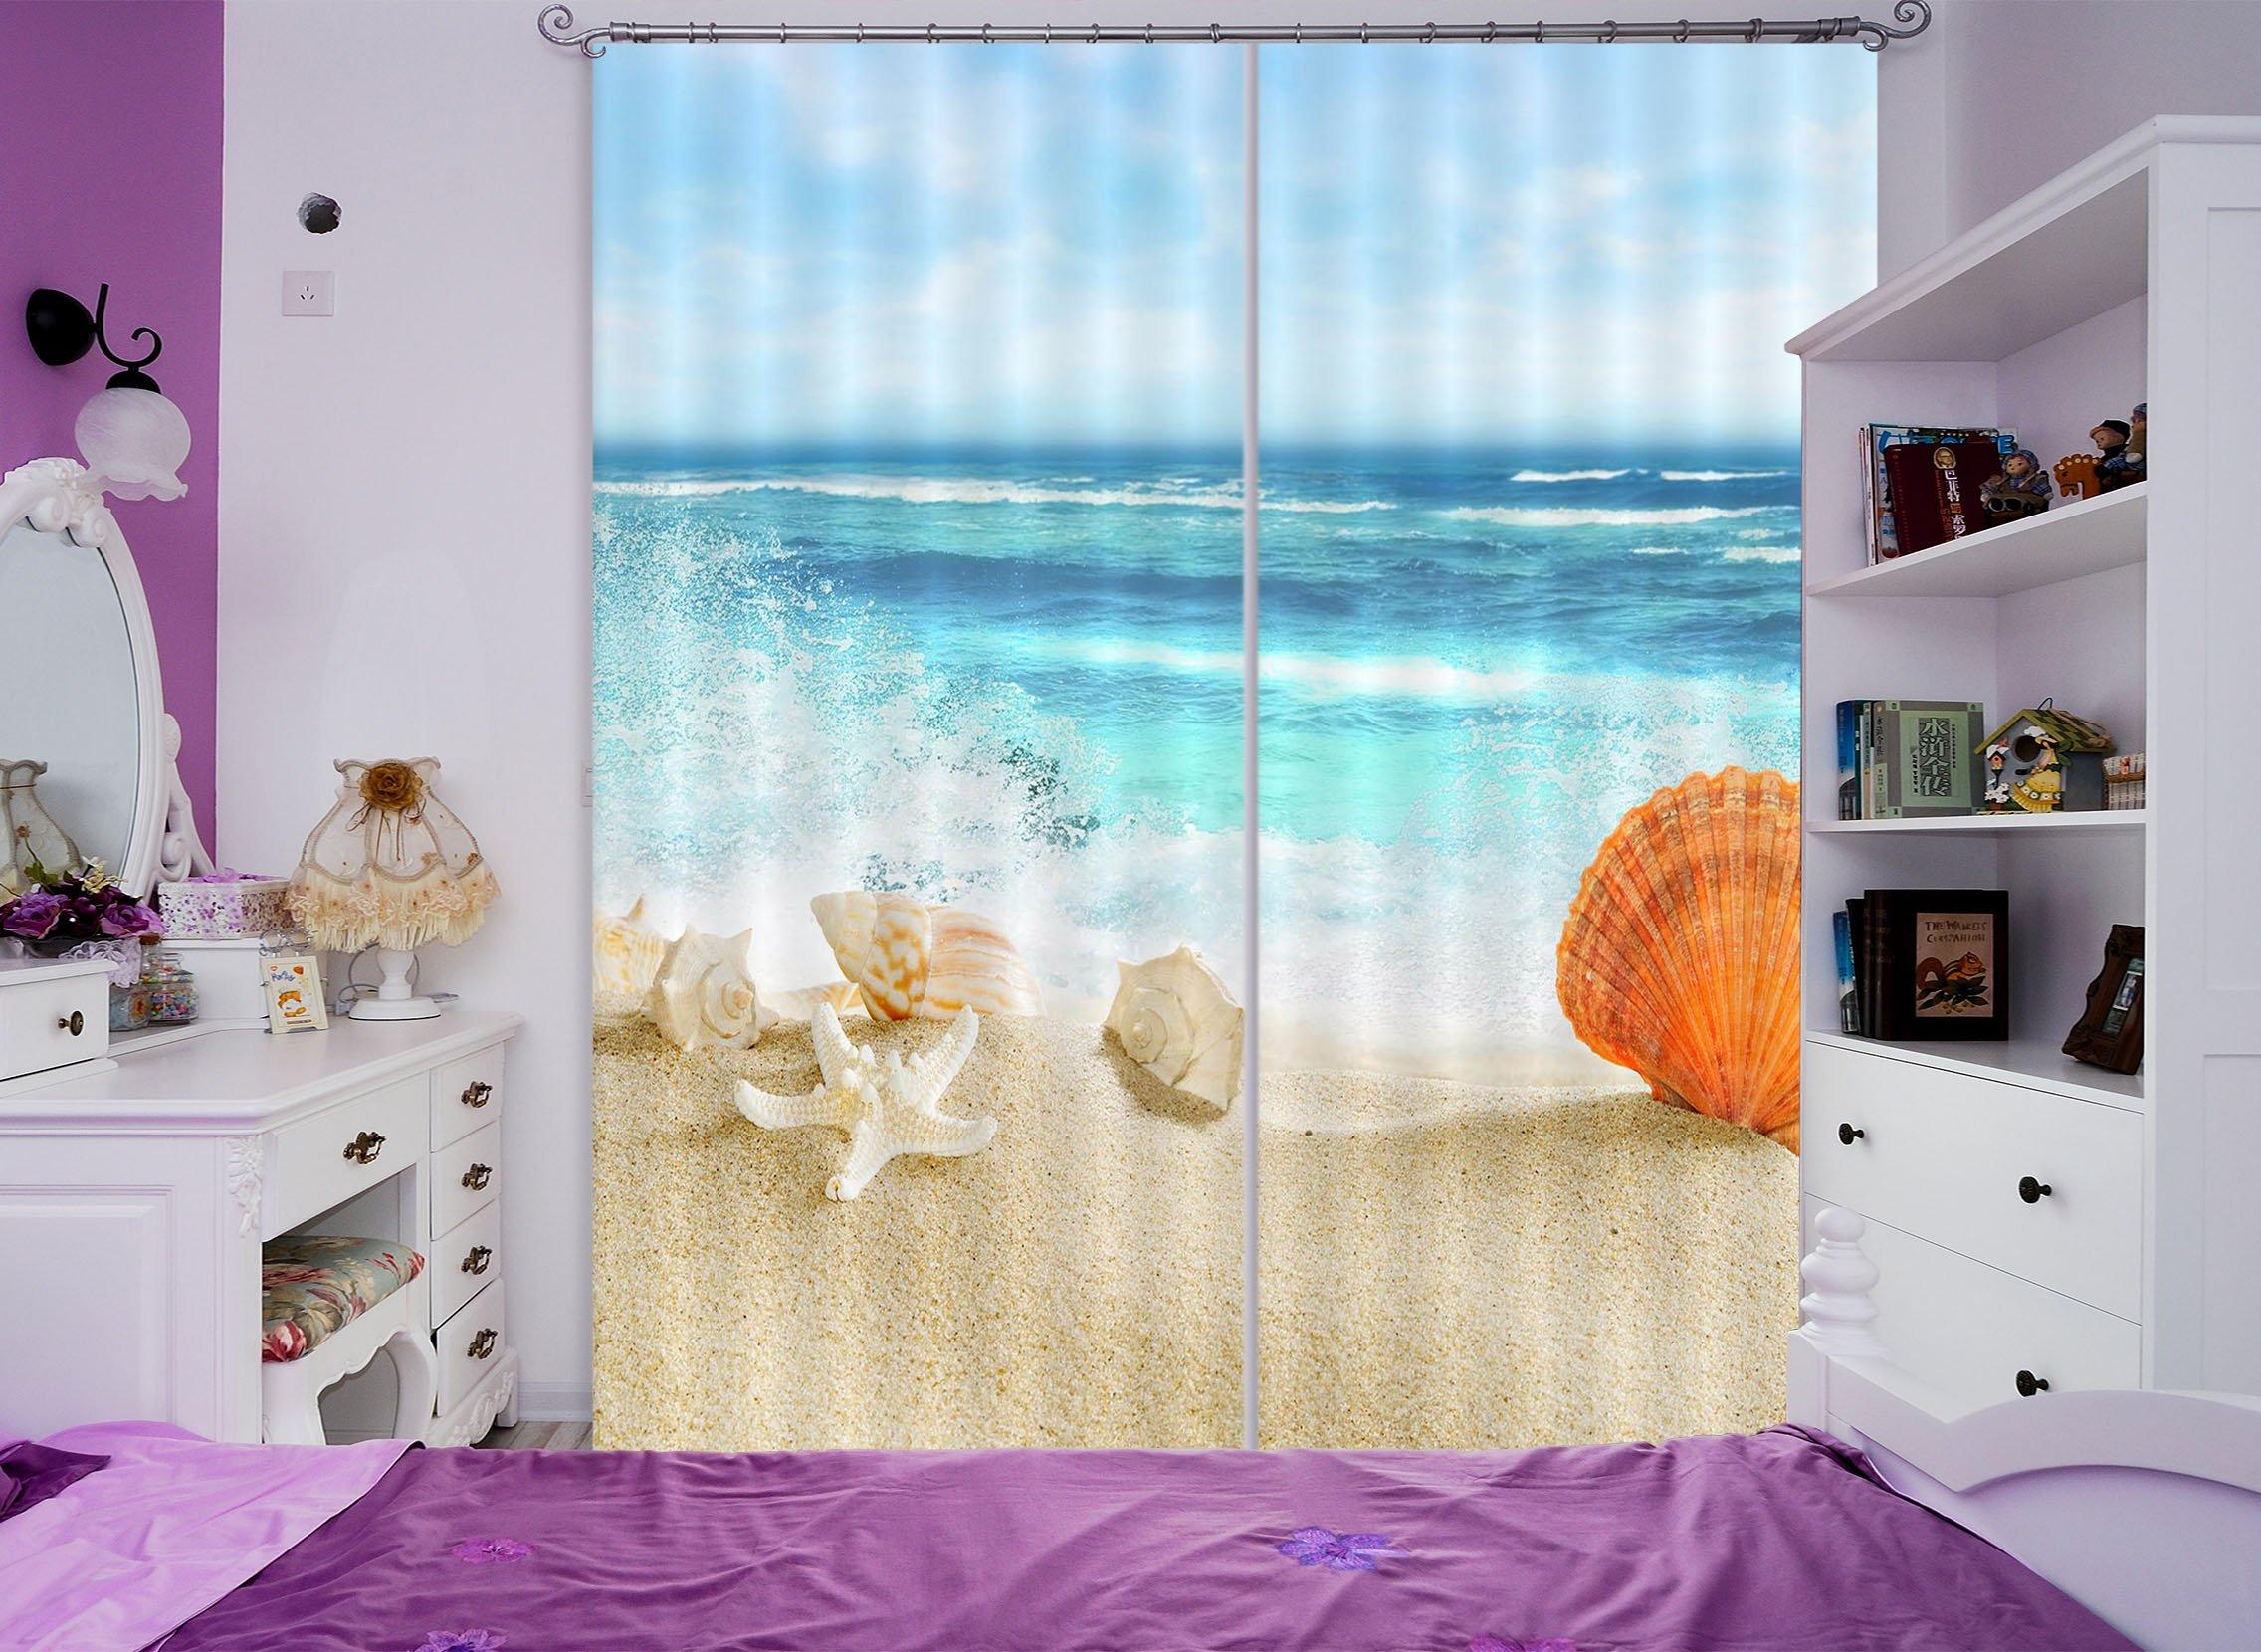 3D Beach Shells 811 Curtains Drapes Wallpaper AJ Wallpaper 